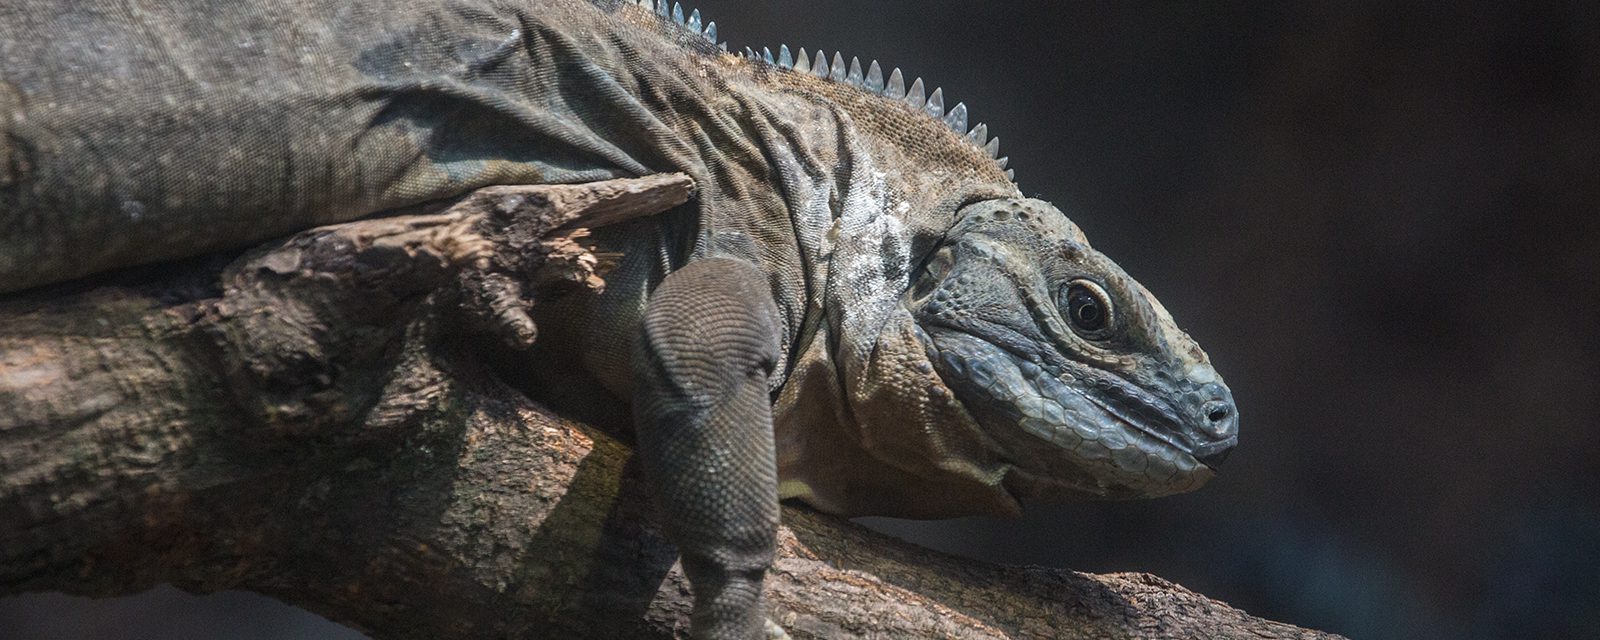 Jamaican iguana in exhibit